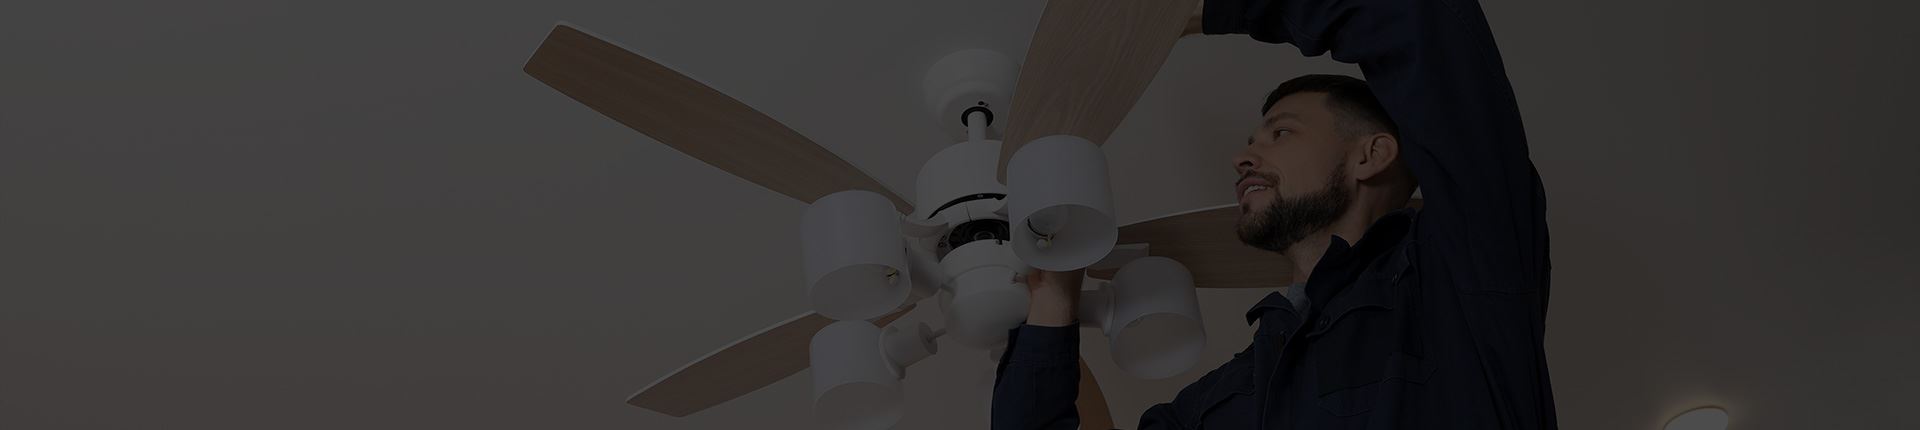 Exhaust Fan Installation in Dallas | Electricians in Dallas